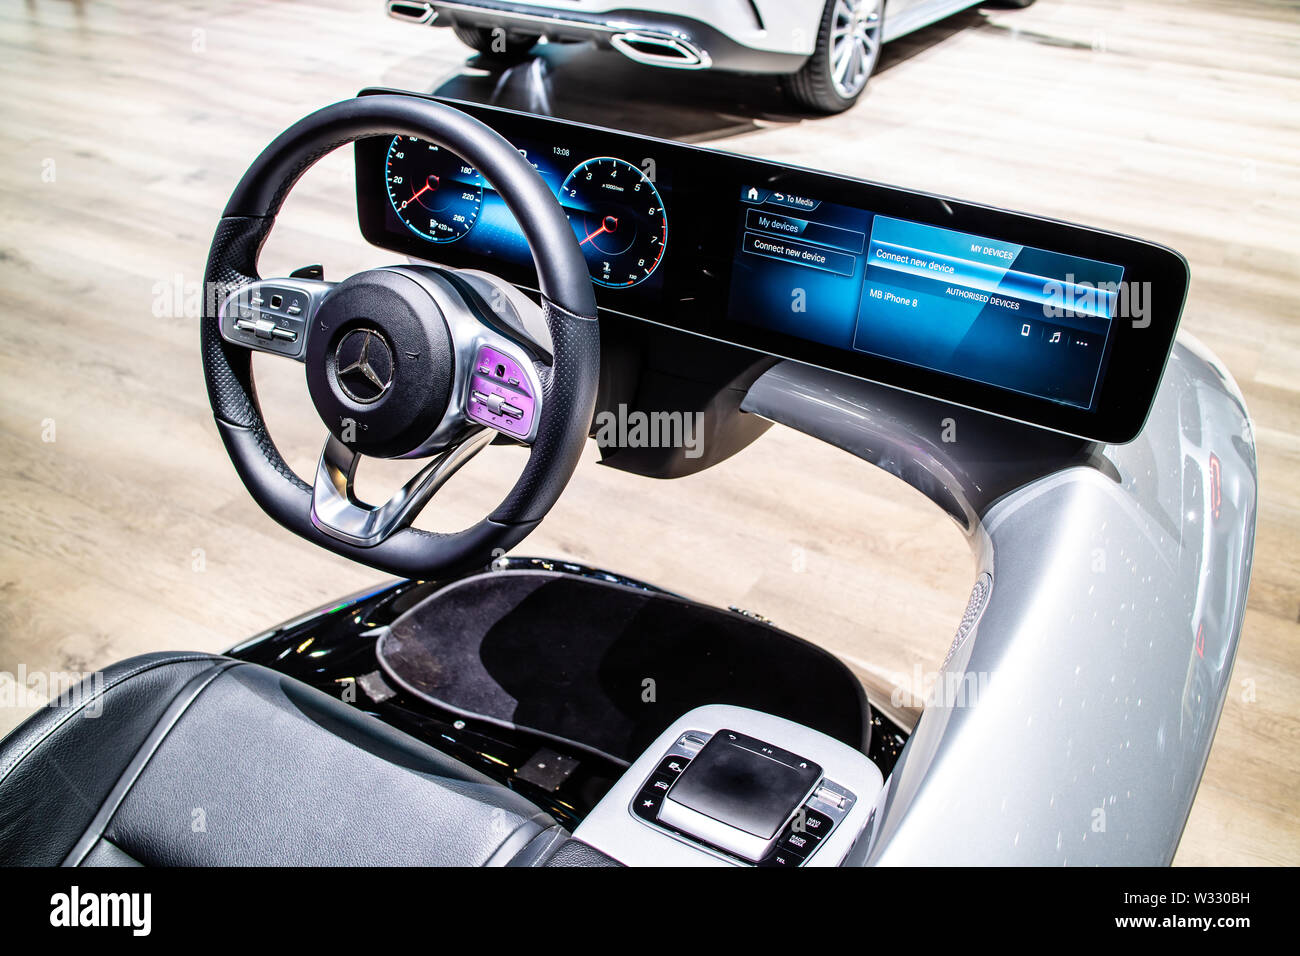 Mercedes-Benz MBUX multimedia system: the new digital cockpit.